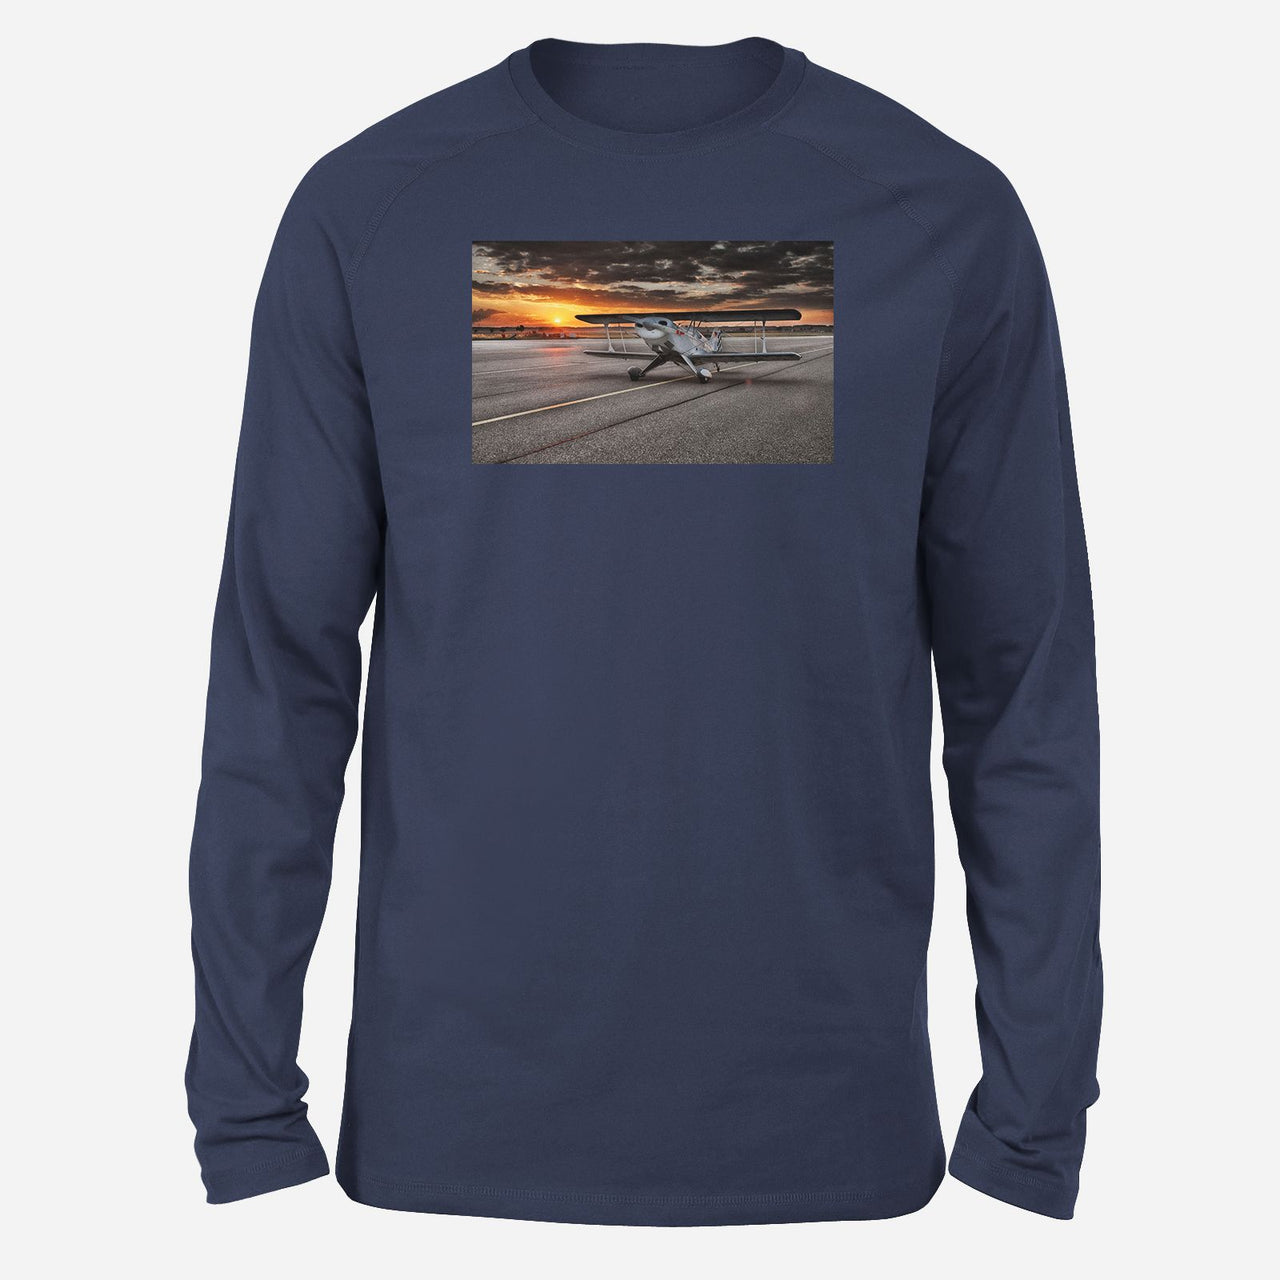 Beautiful Show Airplane Designed Long-Sleeve T-Shirts